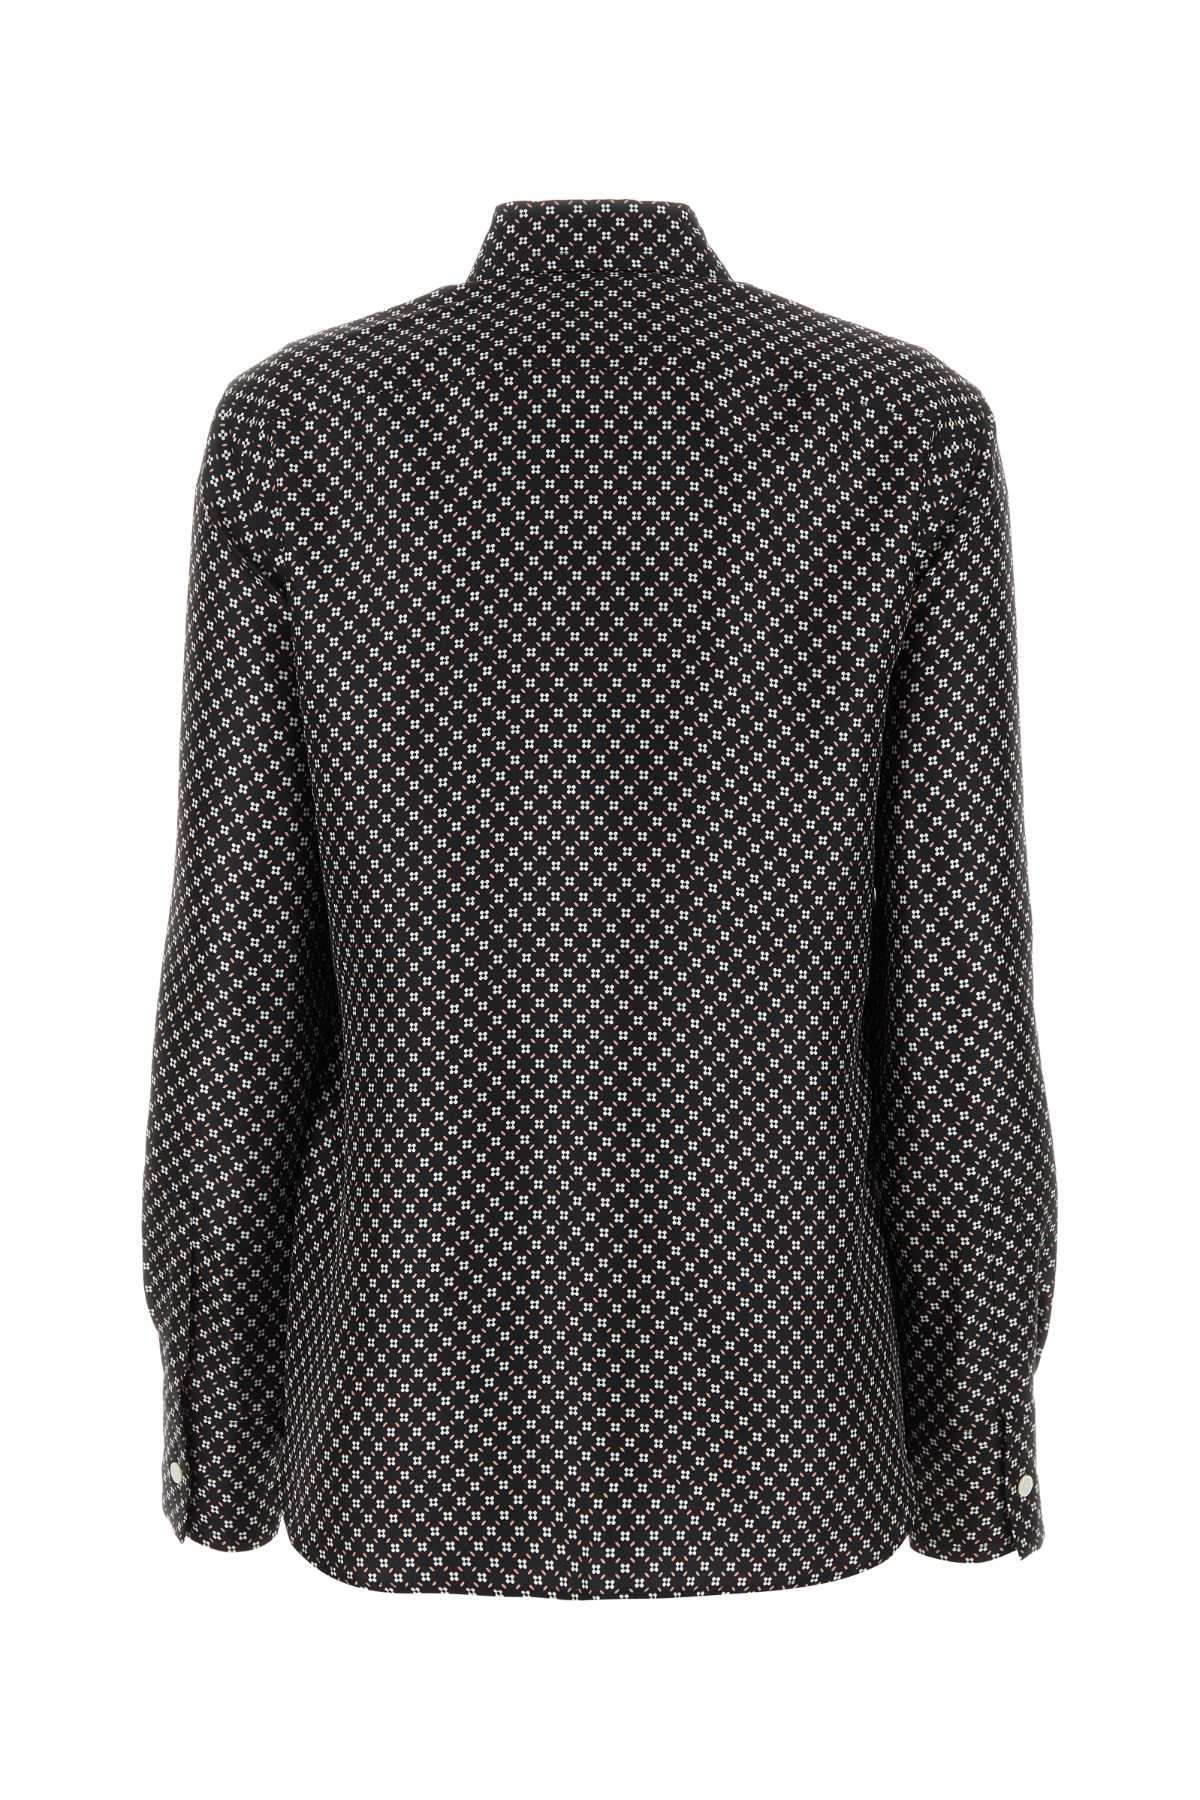 Lanvin Embroidered Silk Shirt In Black